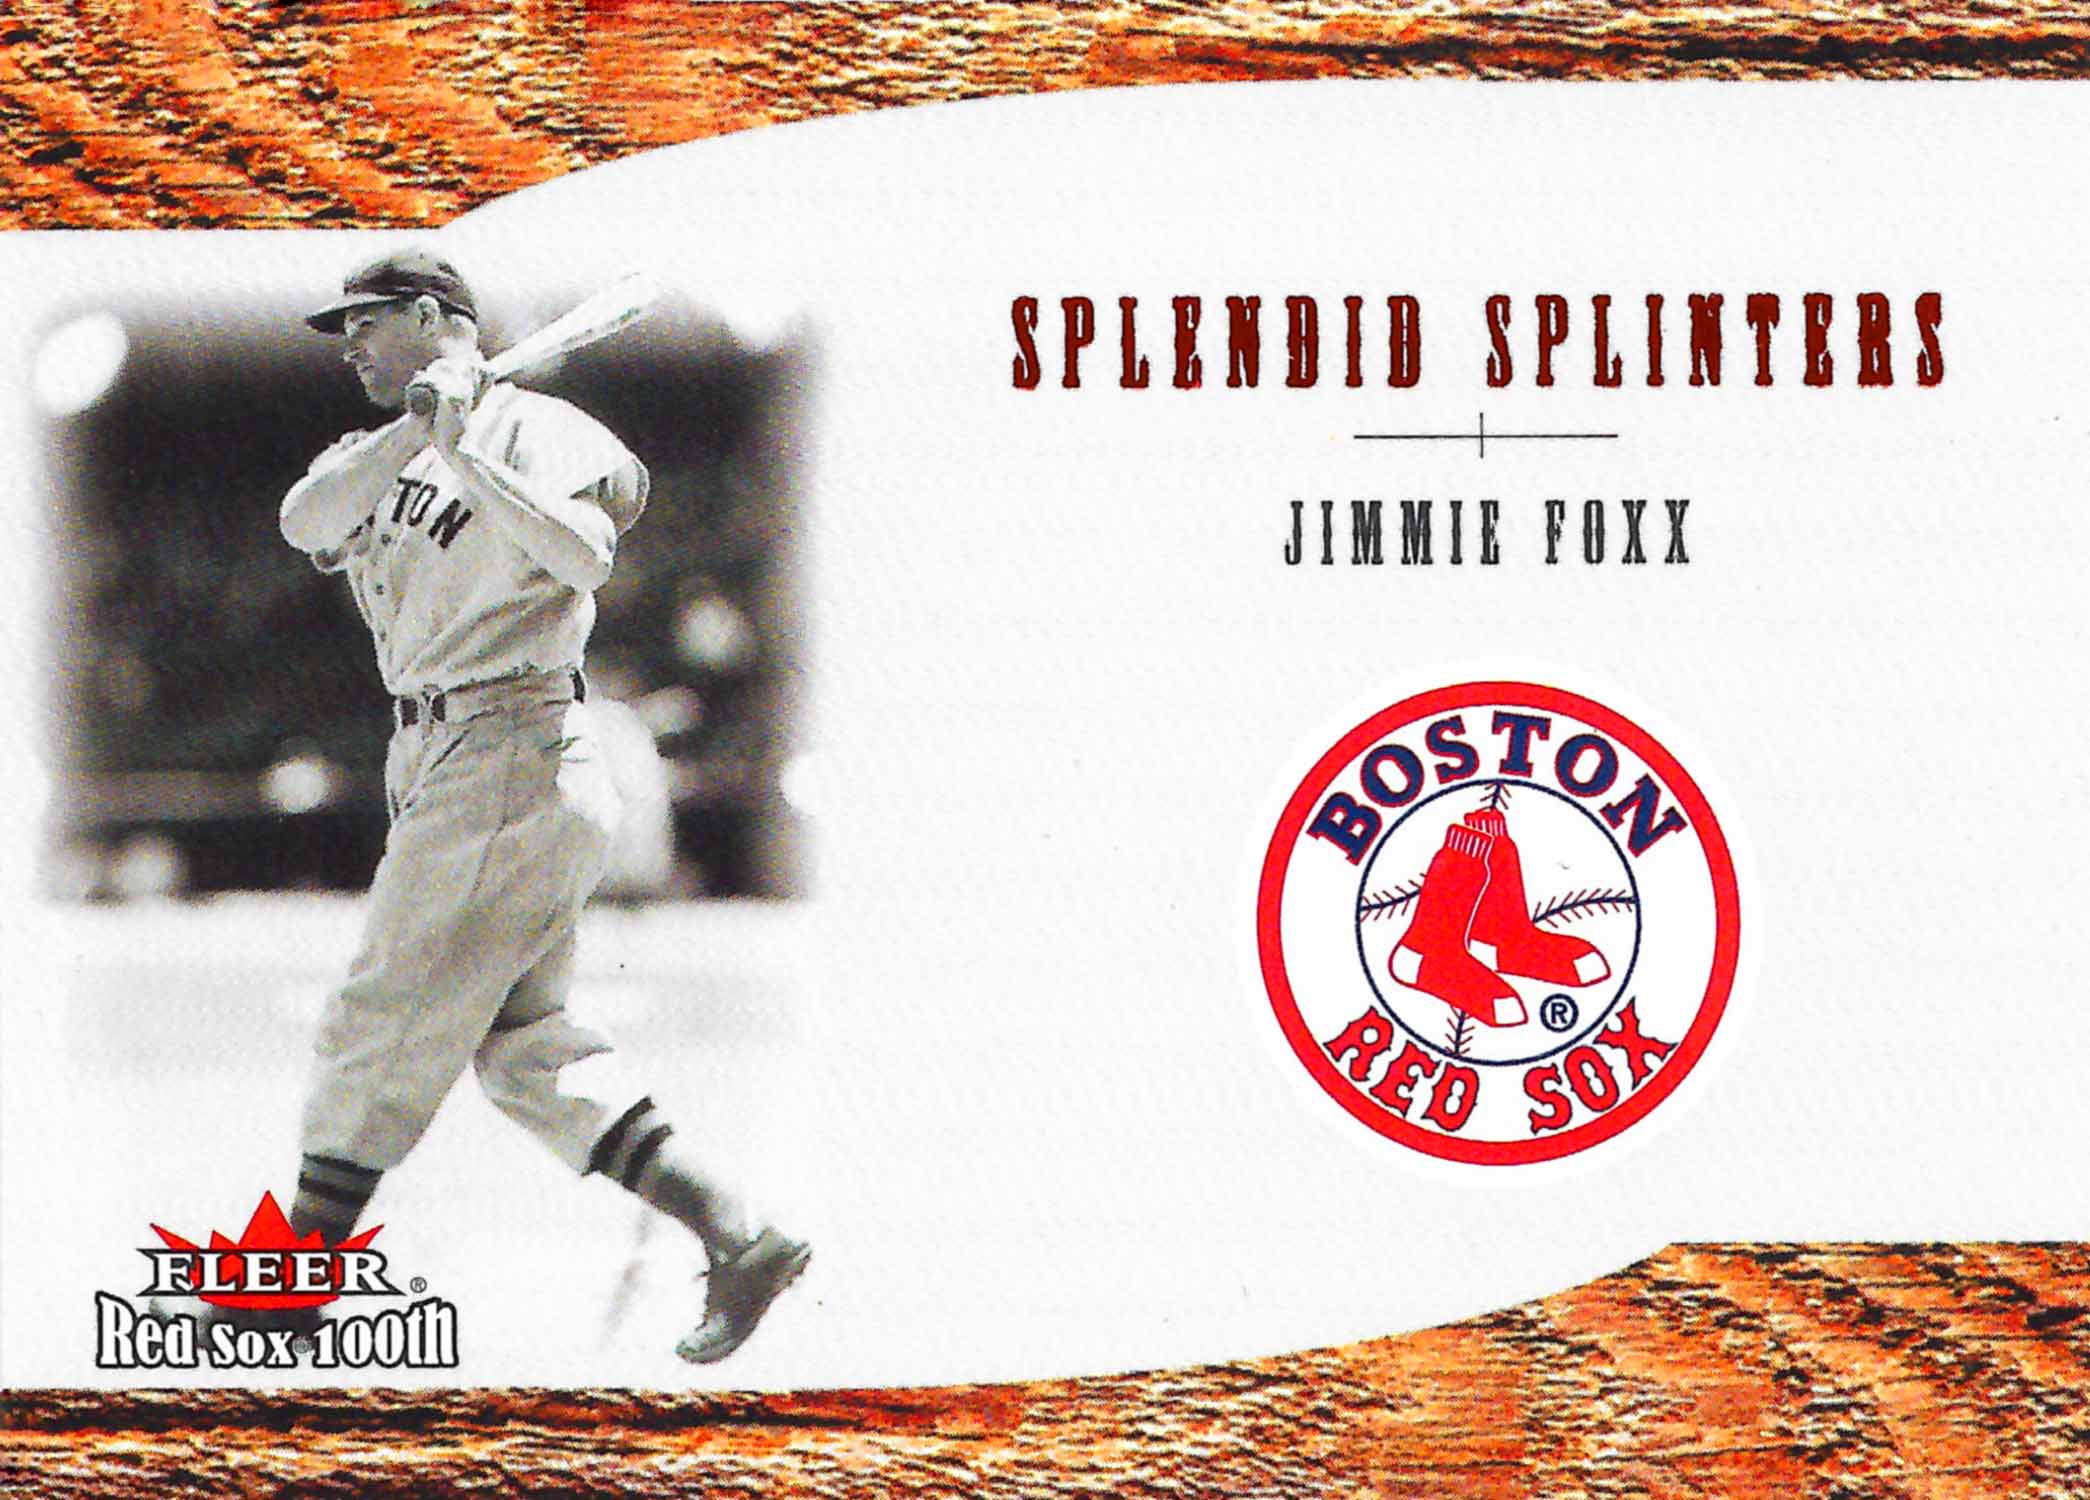 2001 Fleer Red Sox 100th Splendid Splinters